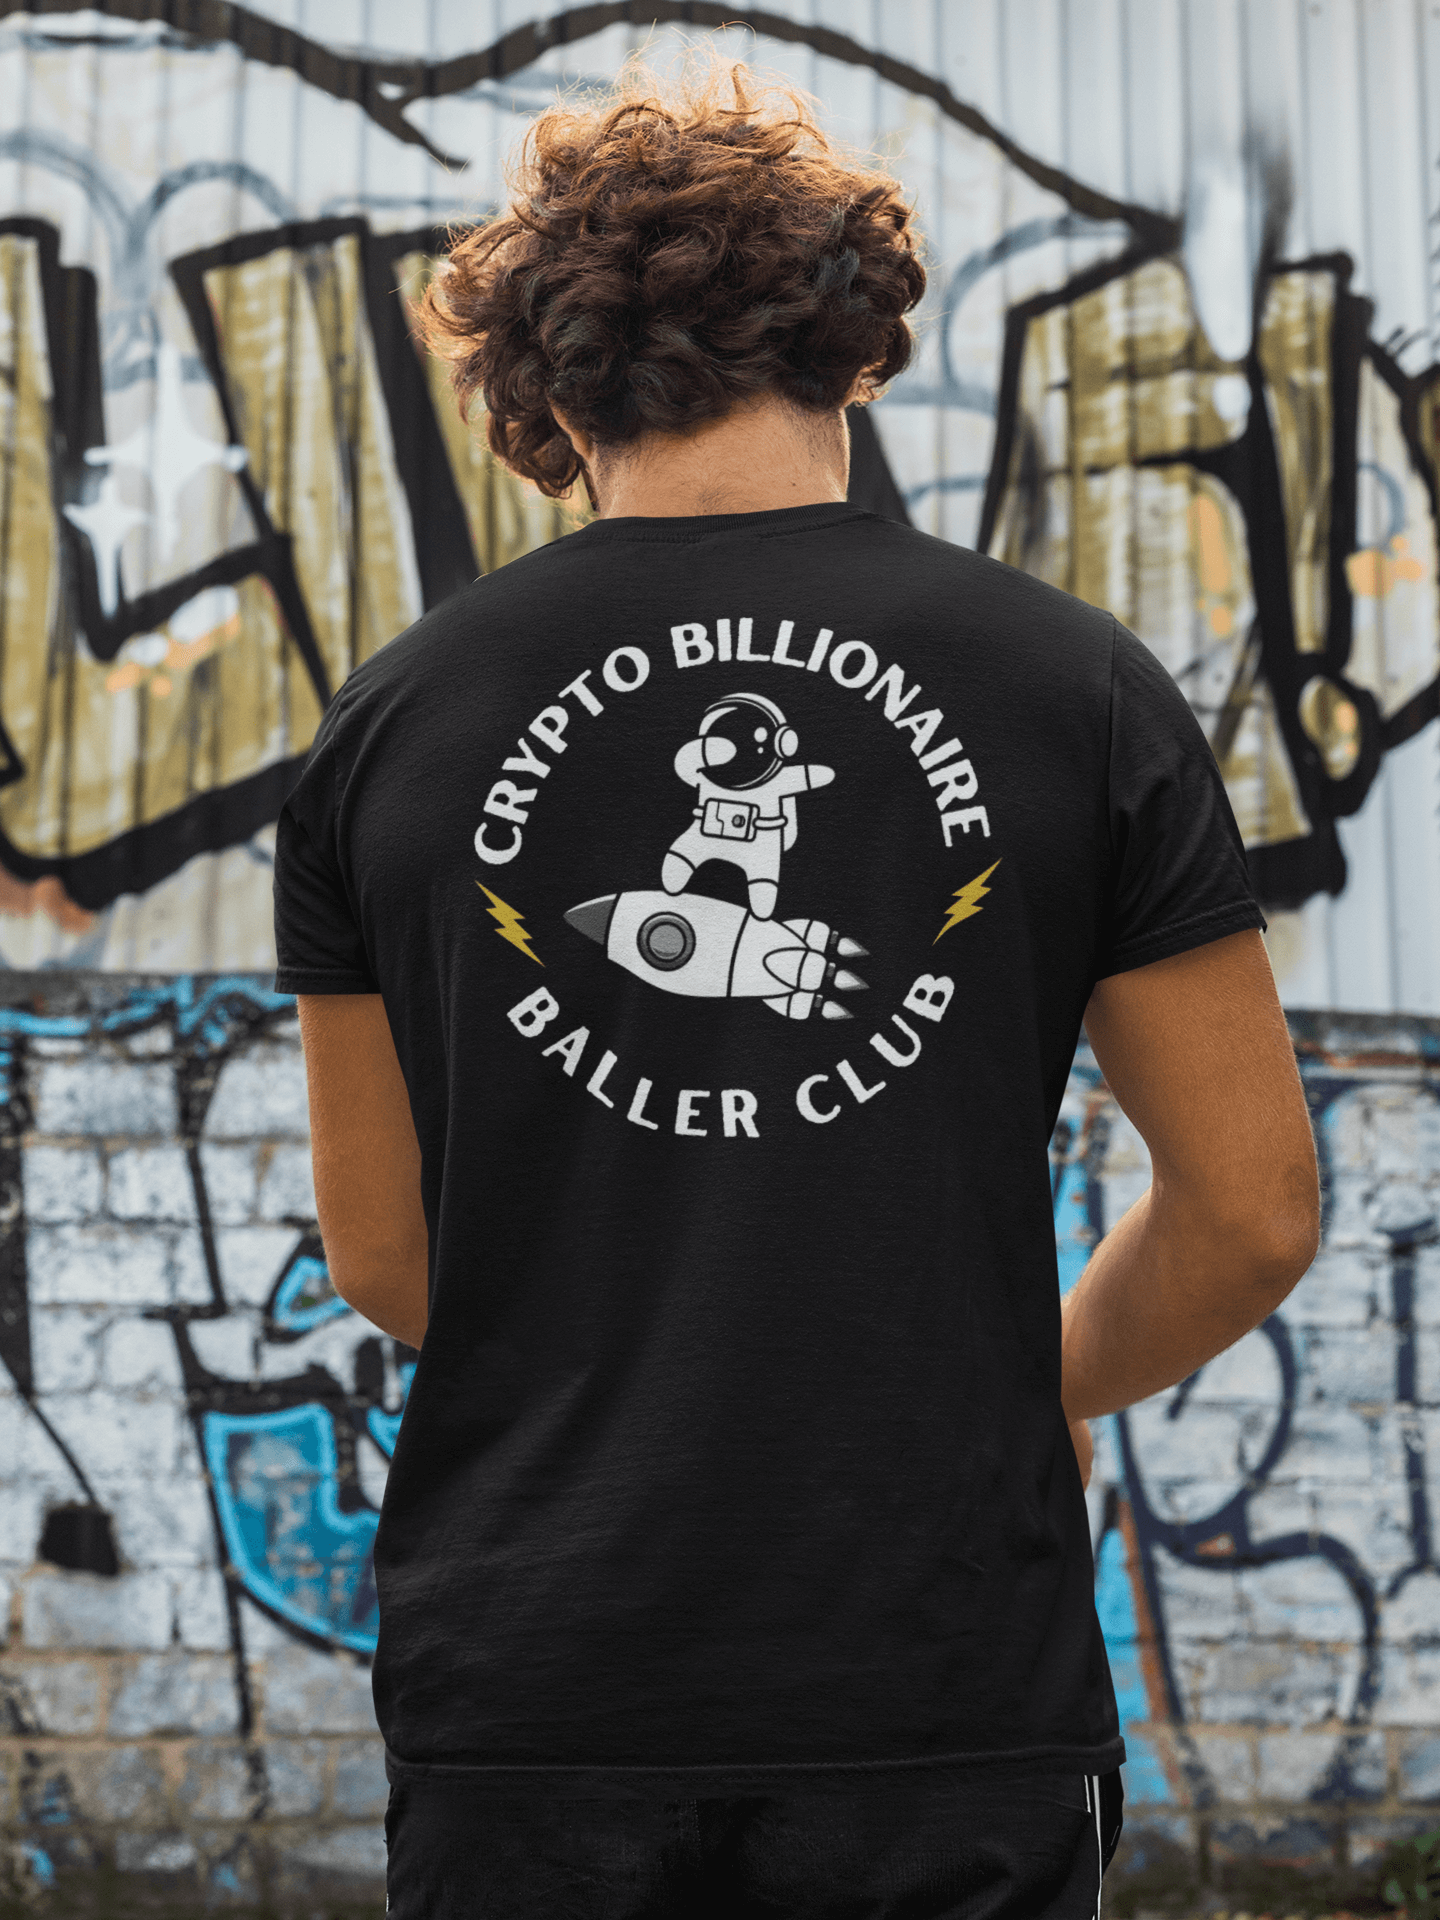 Man wearing "Crypto Billionaire Baller Club" NFT T-Shirt in black